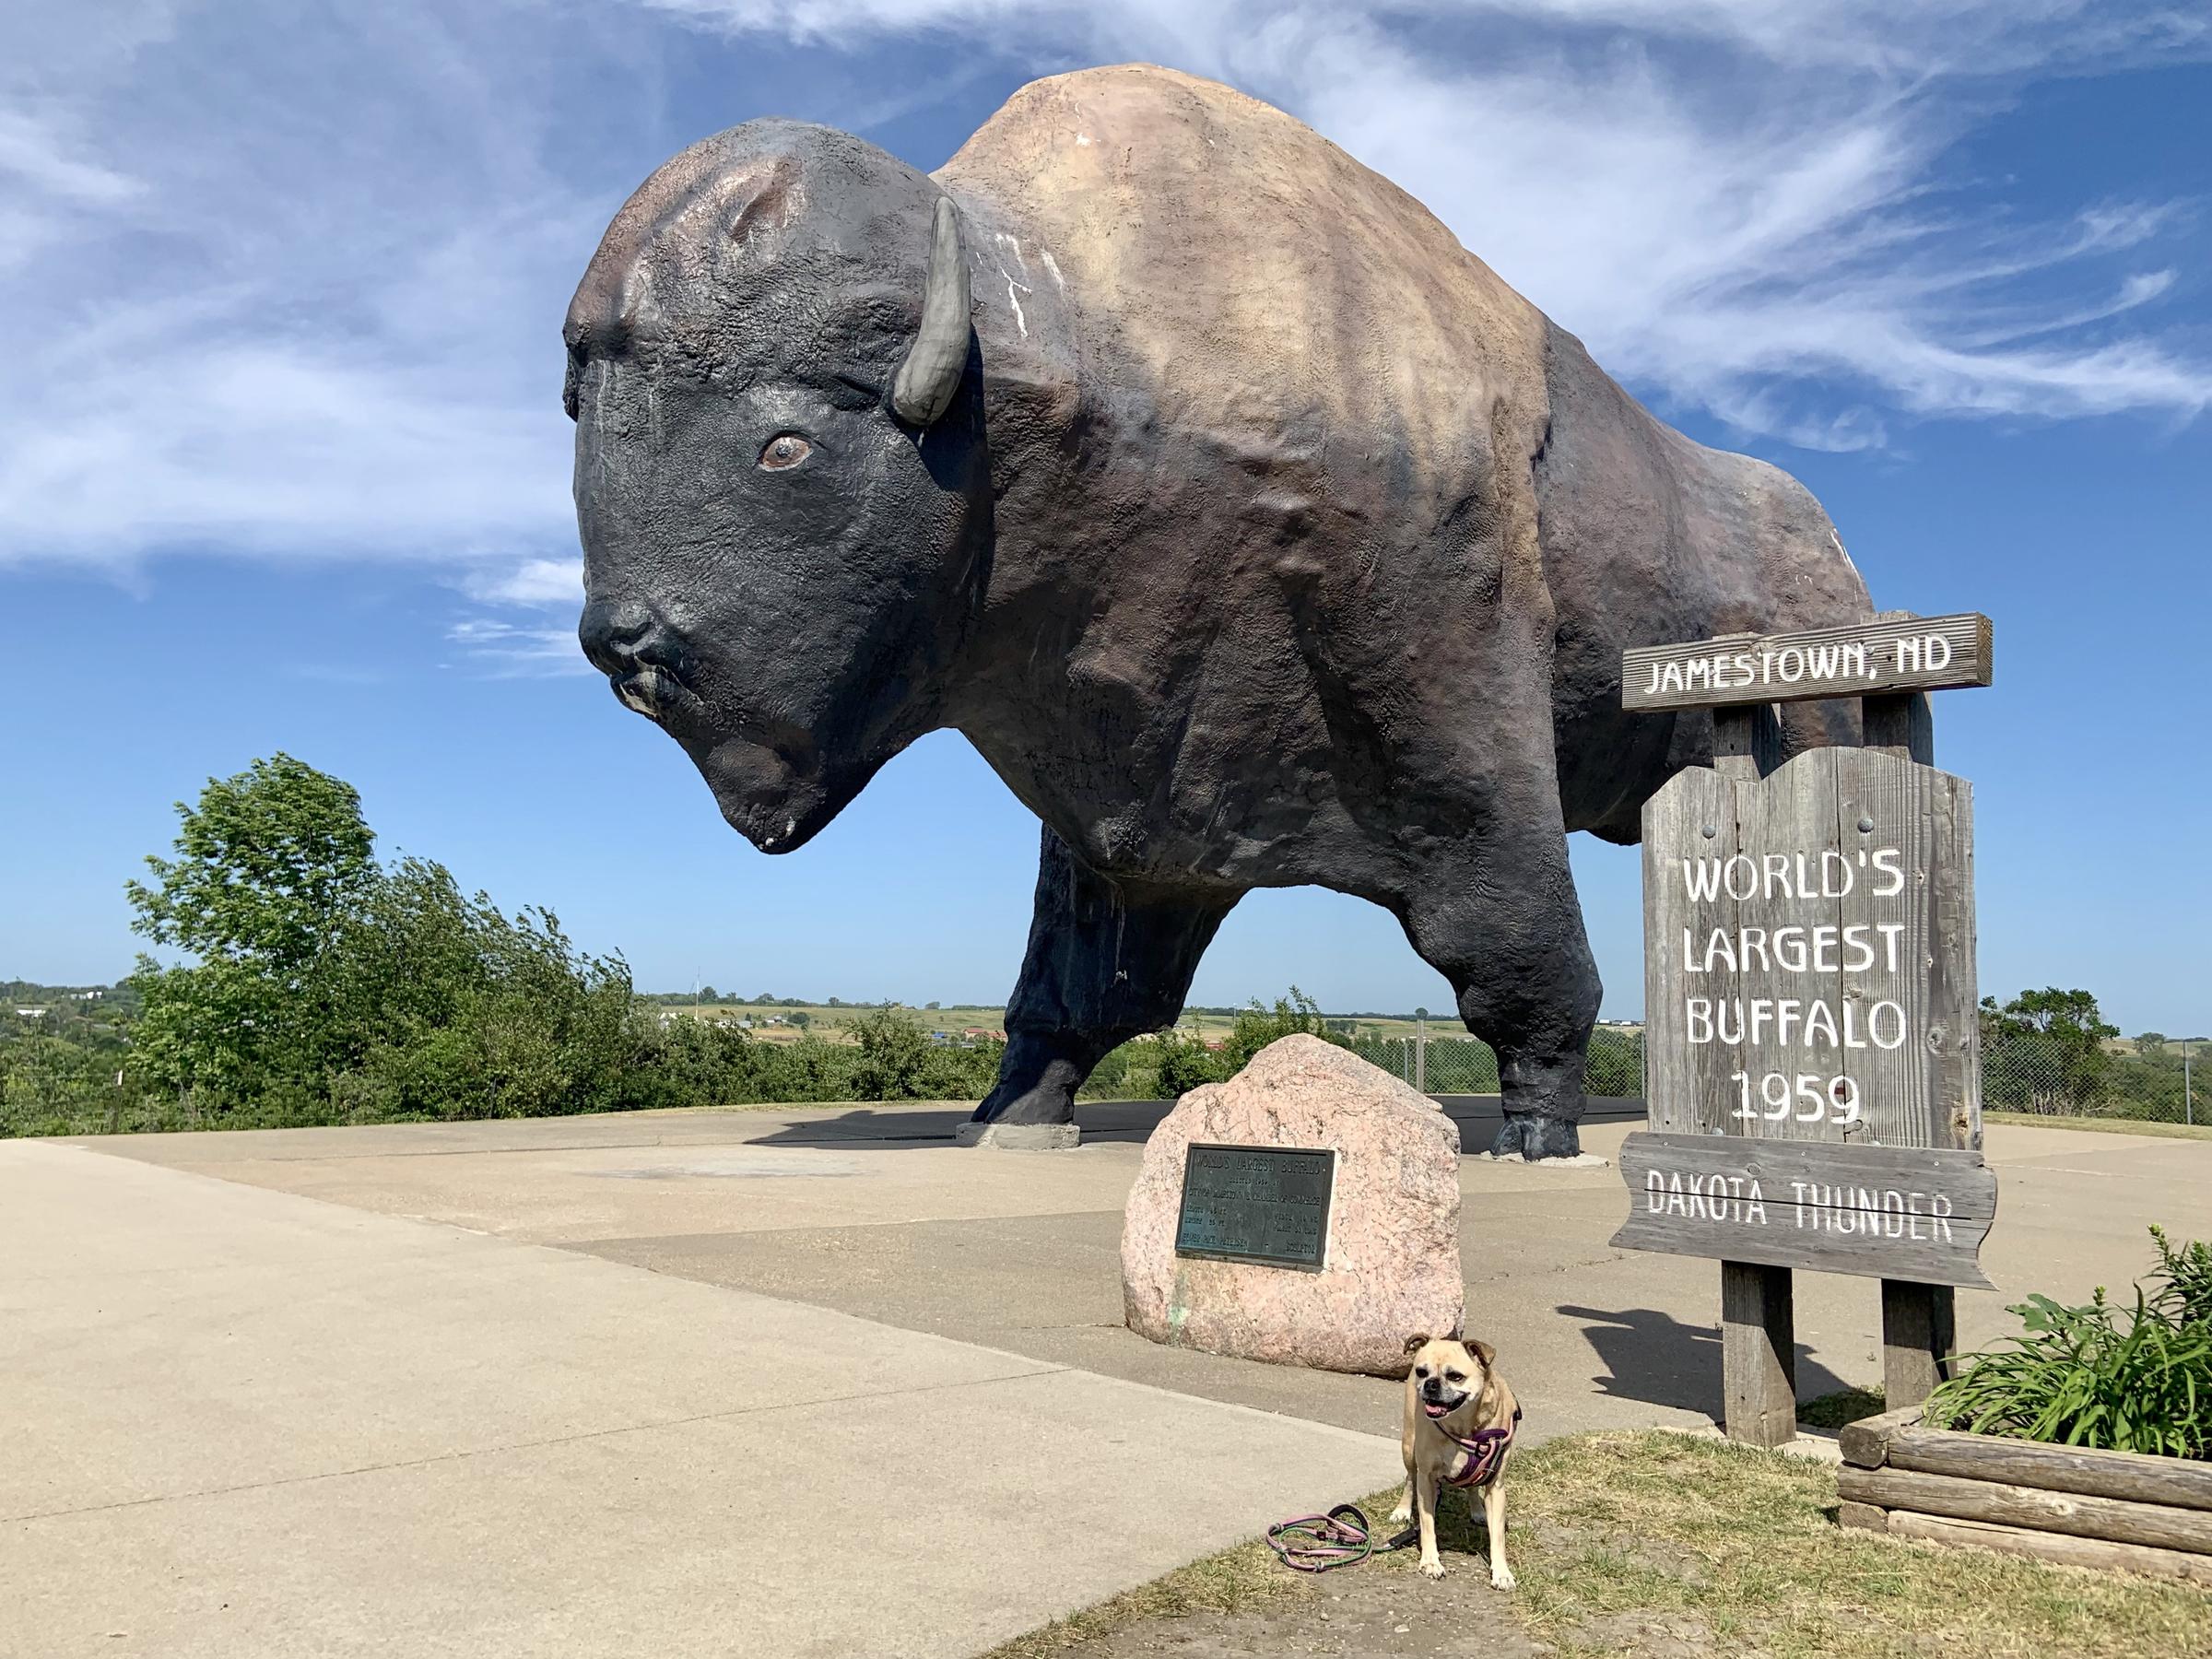 Pet Friendly Dakota Thunder the World's Largest Buffalo